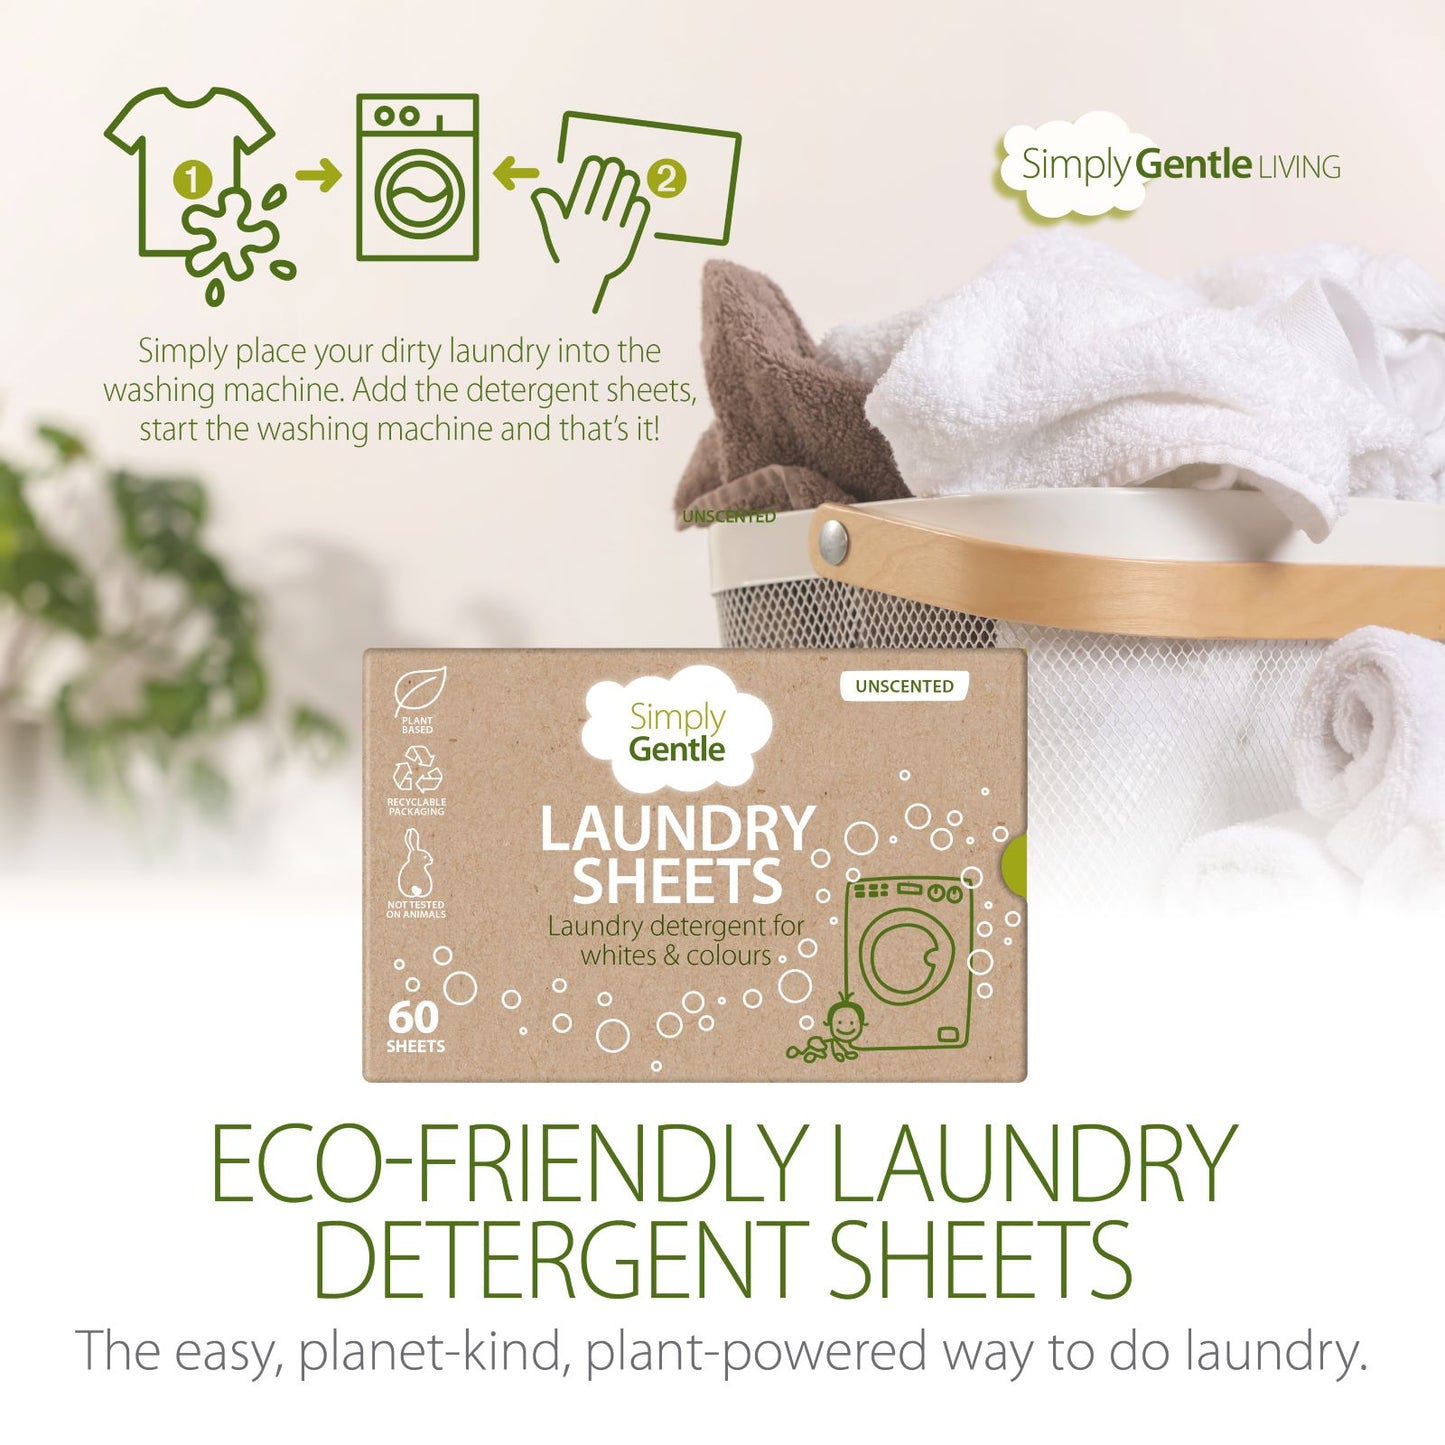 Unfragranced Laundry Sheets Info